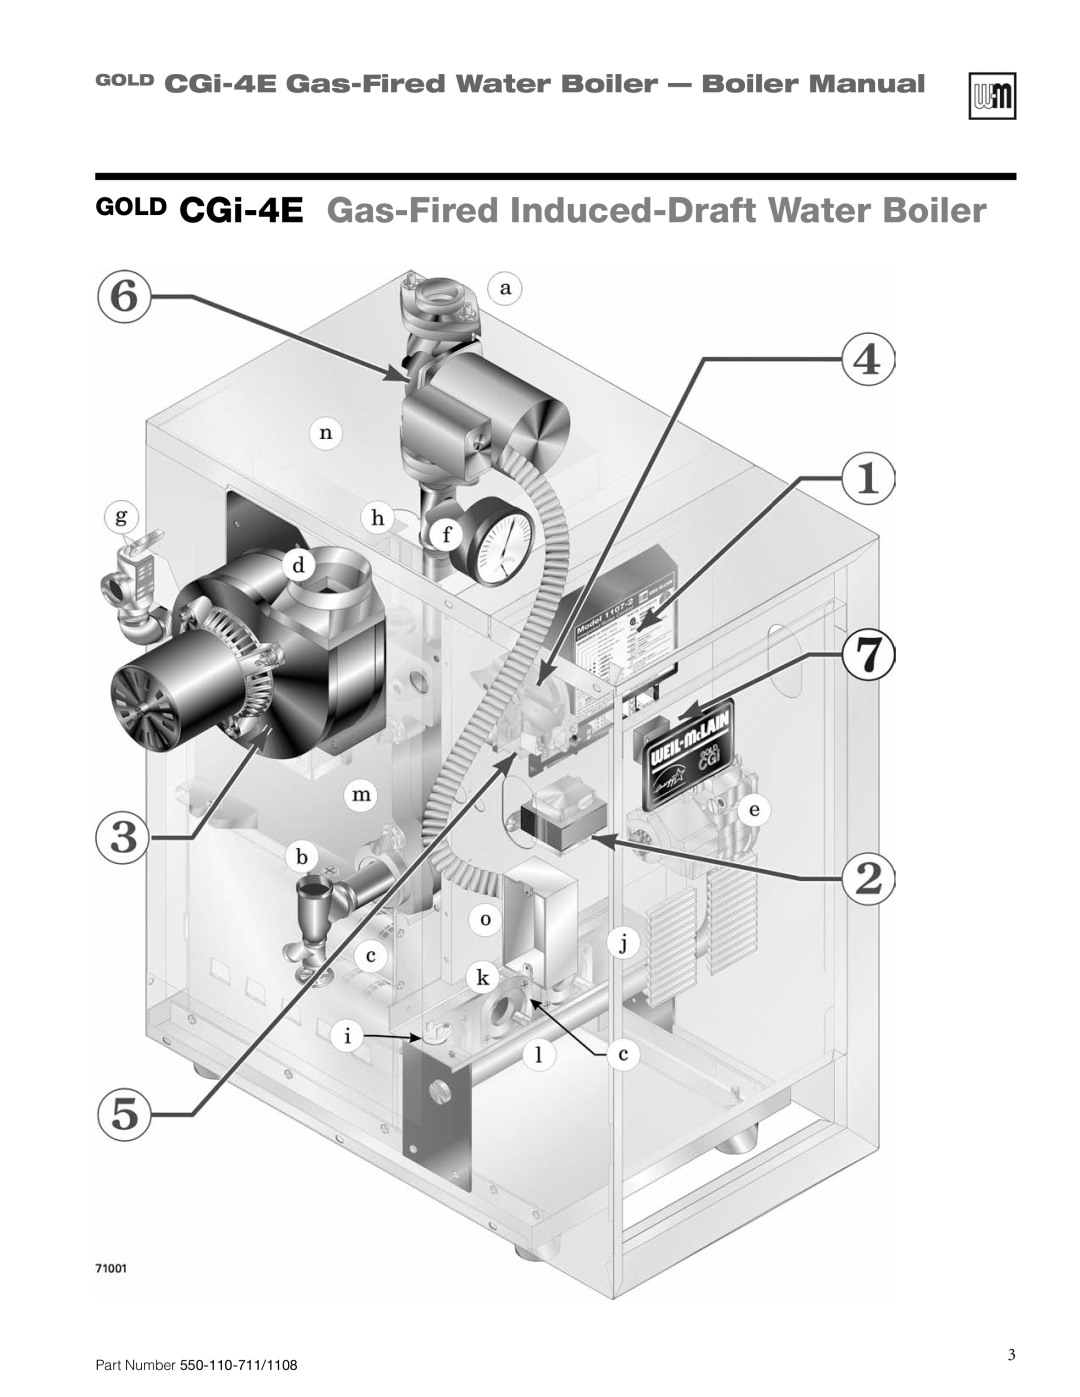 Weil-McLain CGI-4E GOLD CGi-4E Gas-Fired Induced-DraftWater Boiler, GOLD CGi-4E Gas-FiredWater Boiler - Boiler Manual 